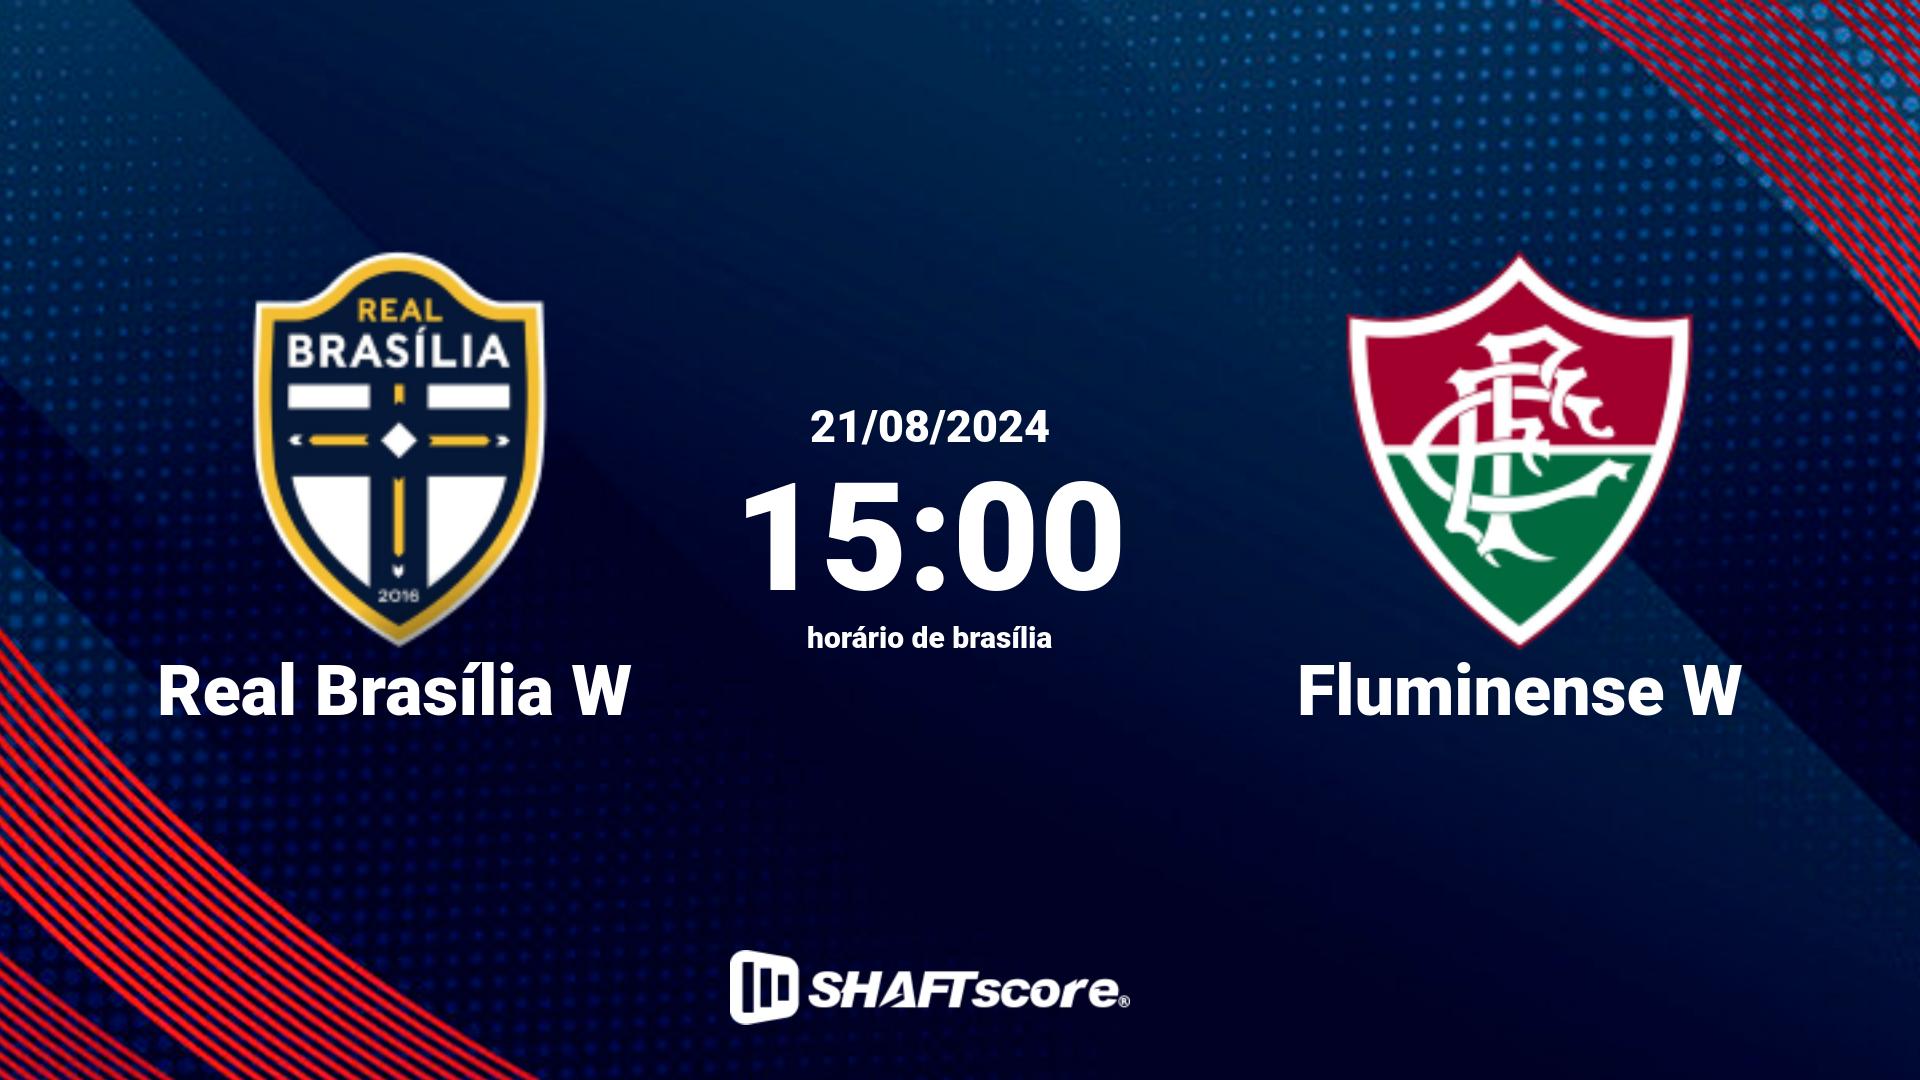 Estatísticas do jogo Real Brasília W vs Fluminense W 27.06 15:00